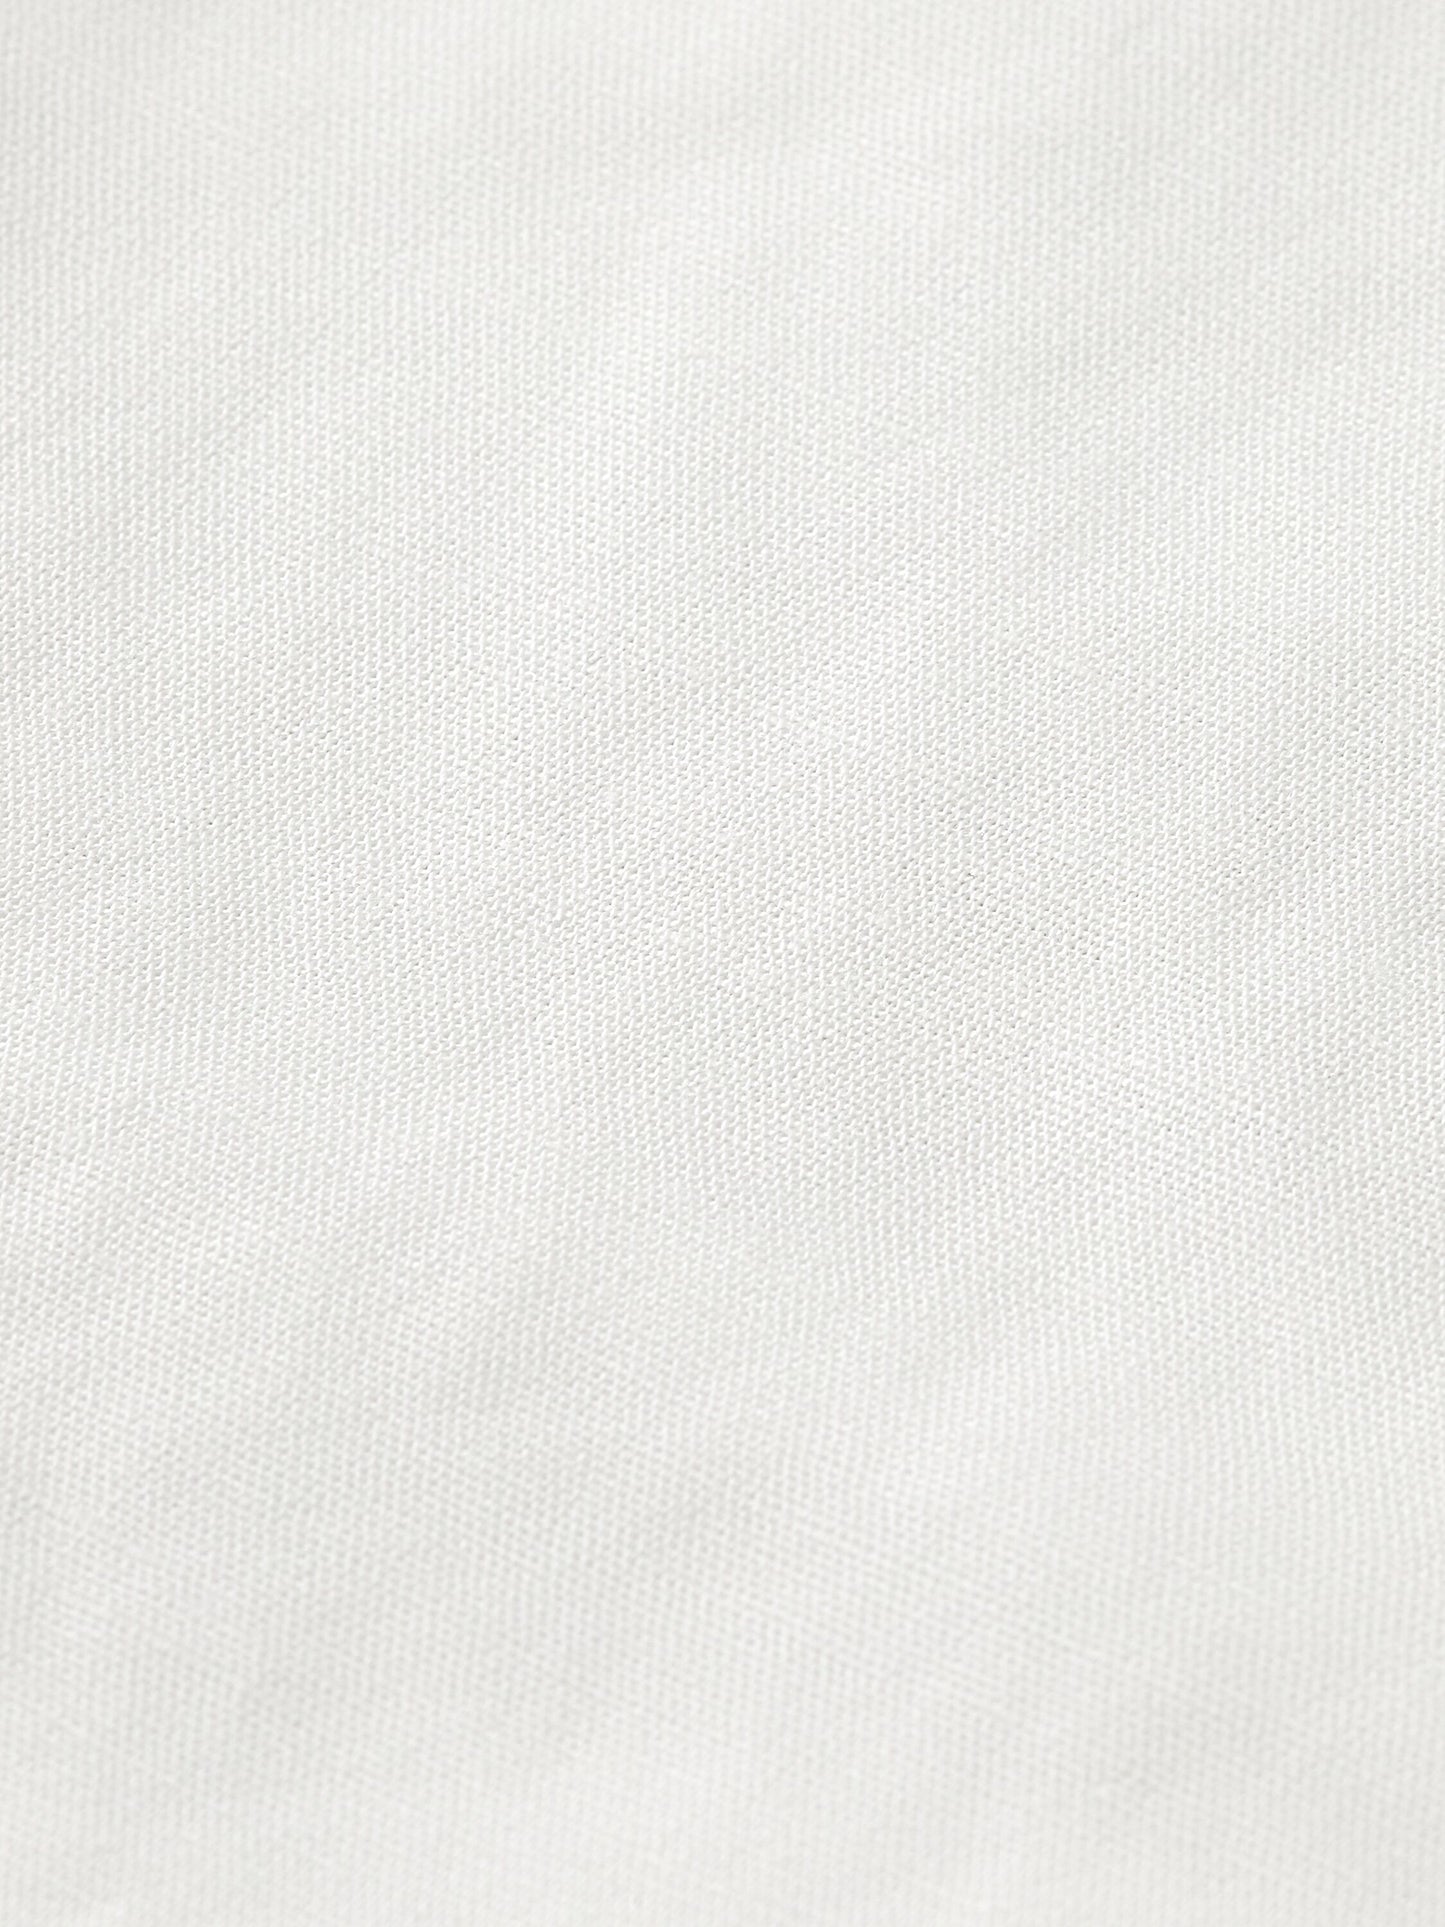 Scotch & Soda Boys Long Sleeve Linen Shirt _White 170510-0006